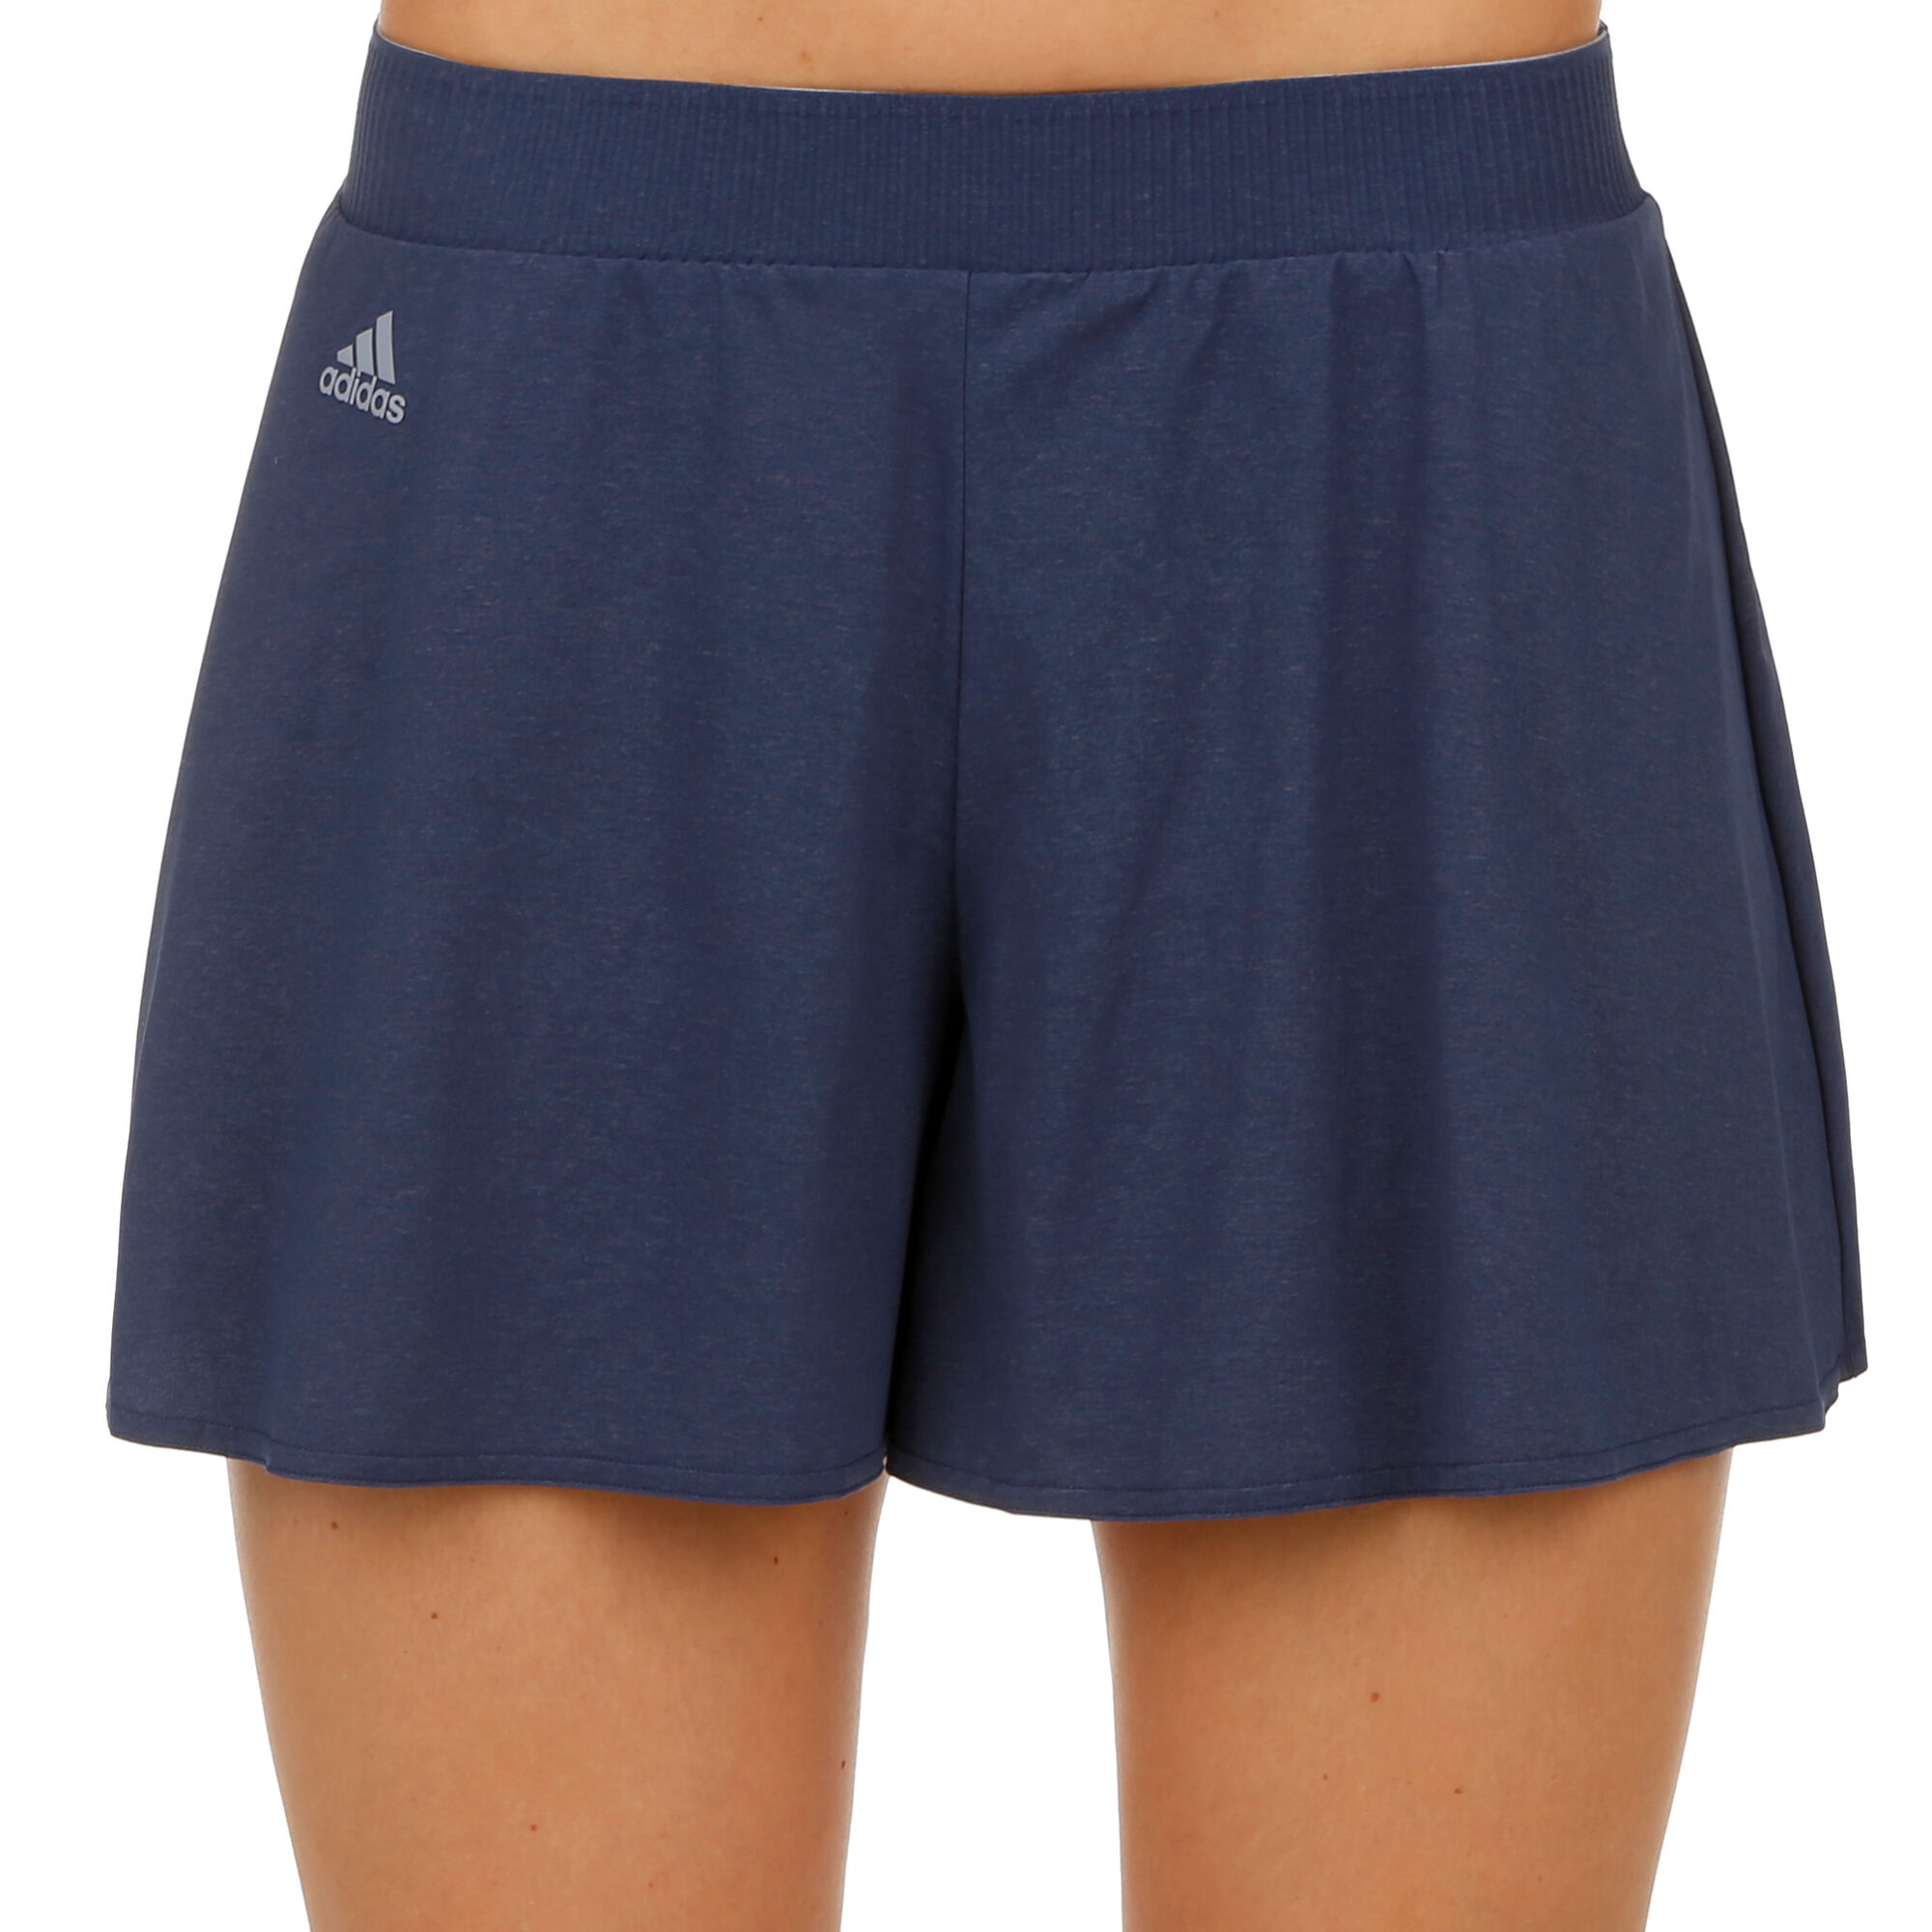 buy adidas Skirt Women - Dark Blue, Blue online | Tennis-Point